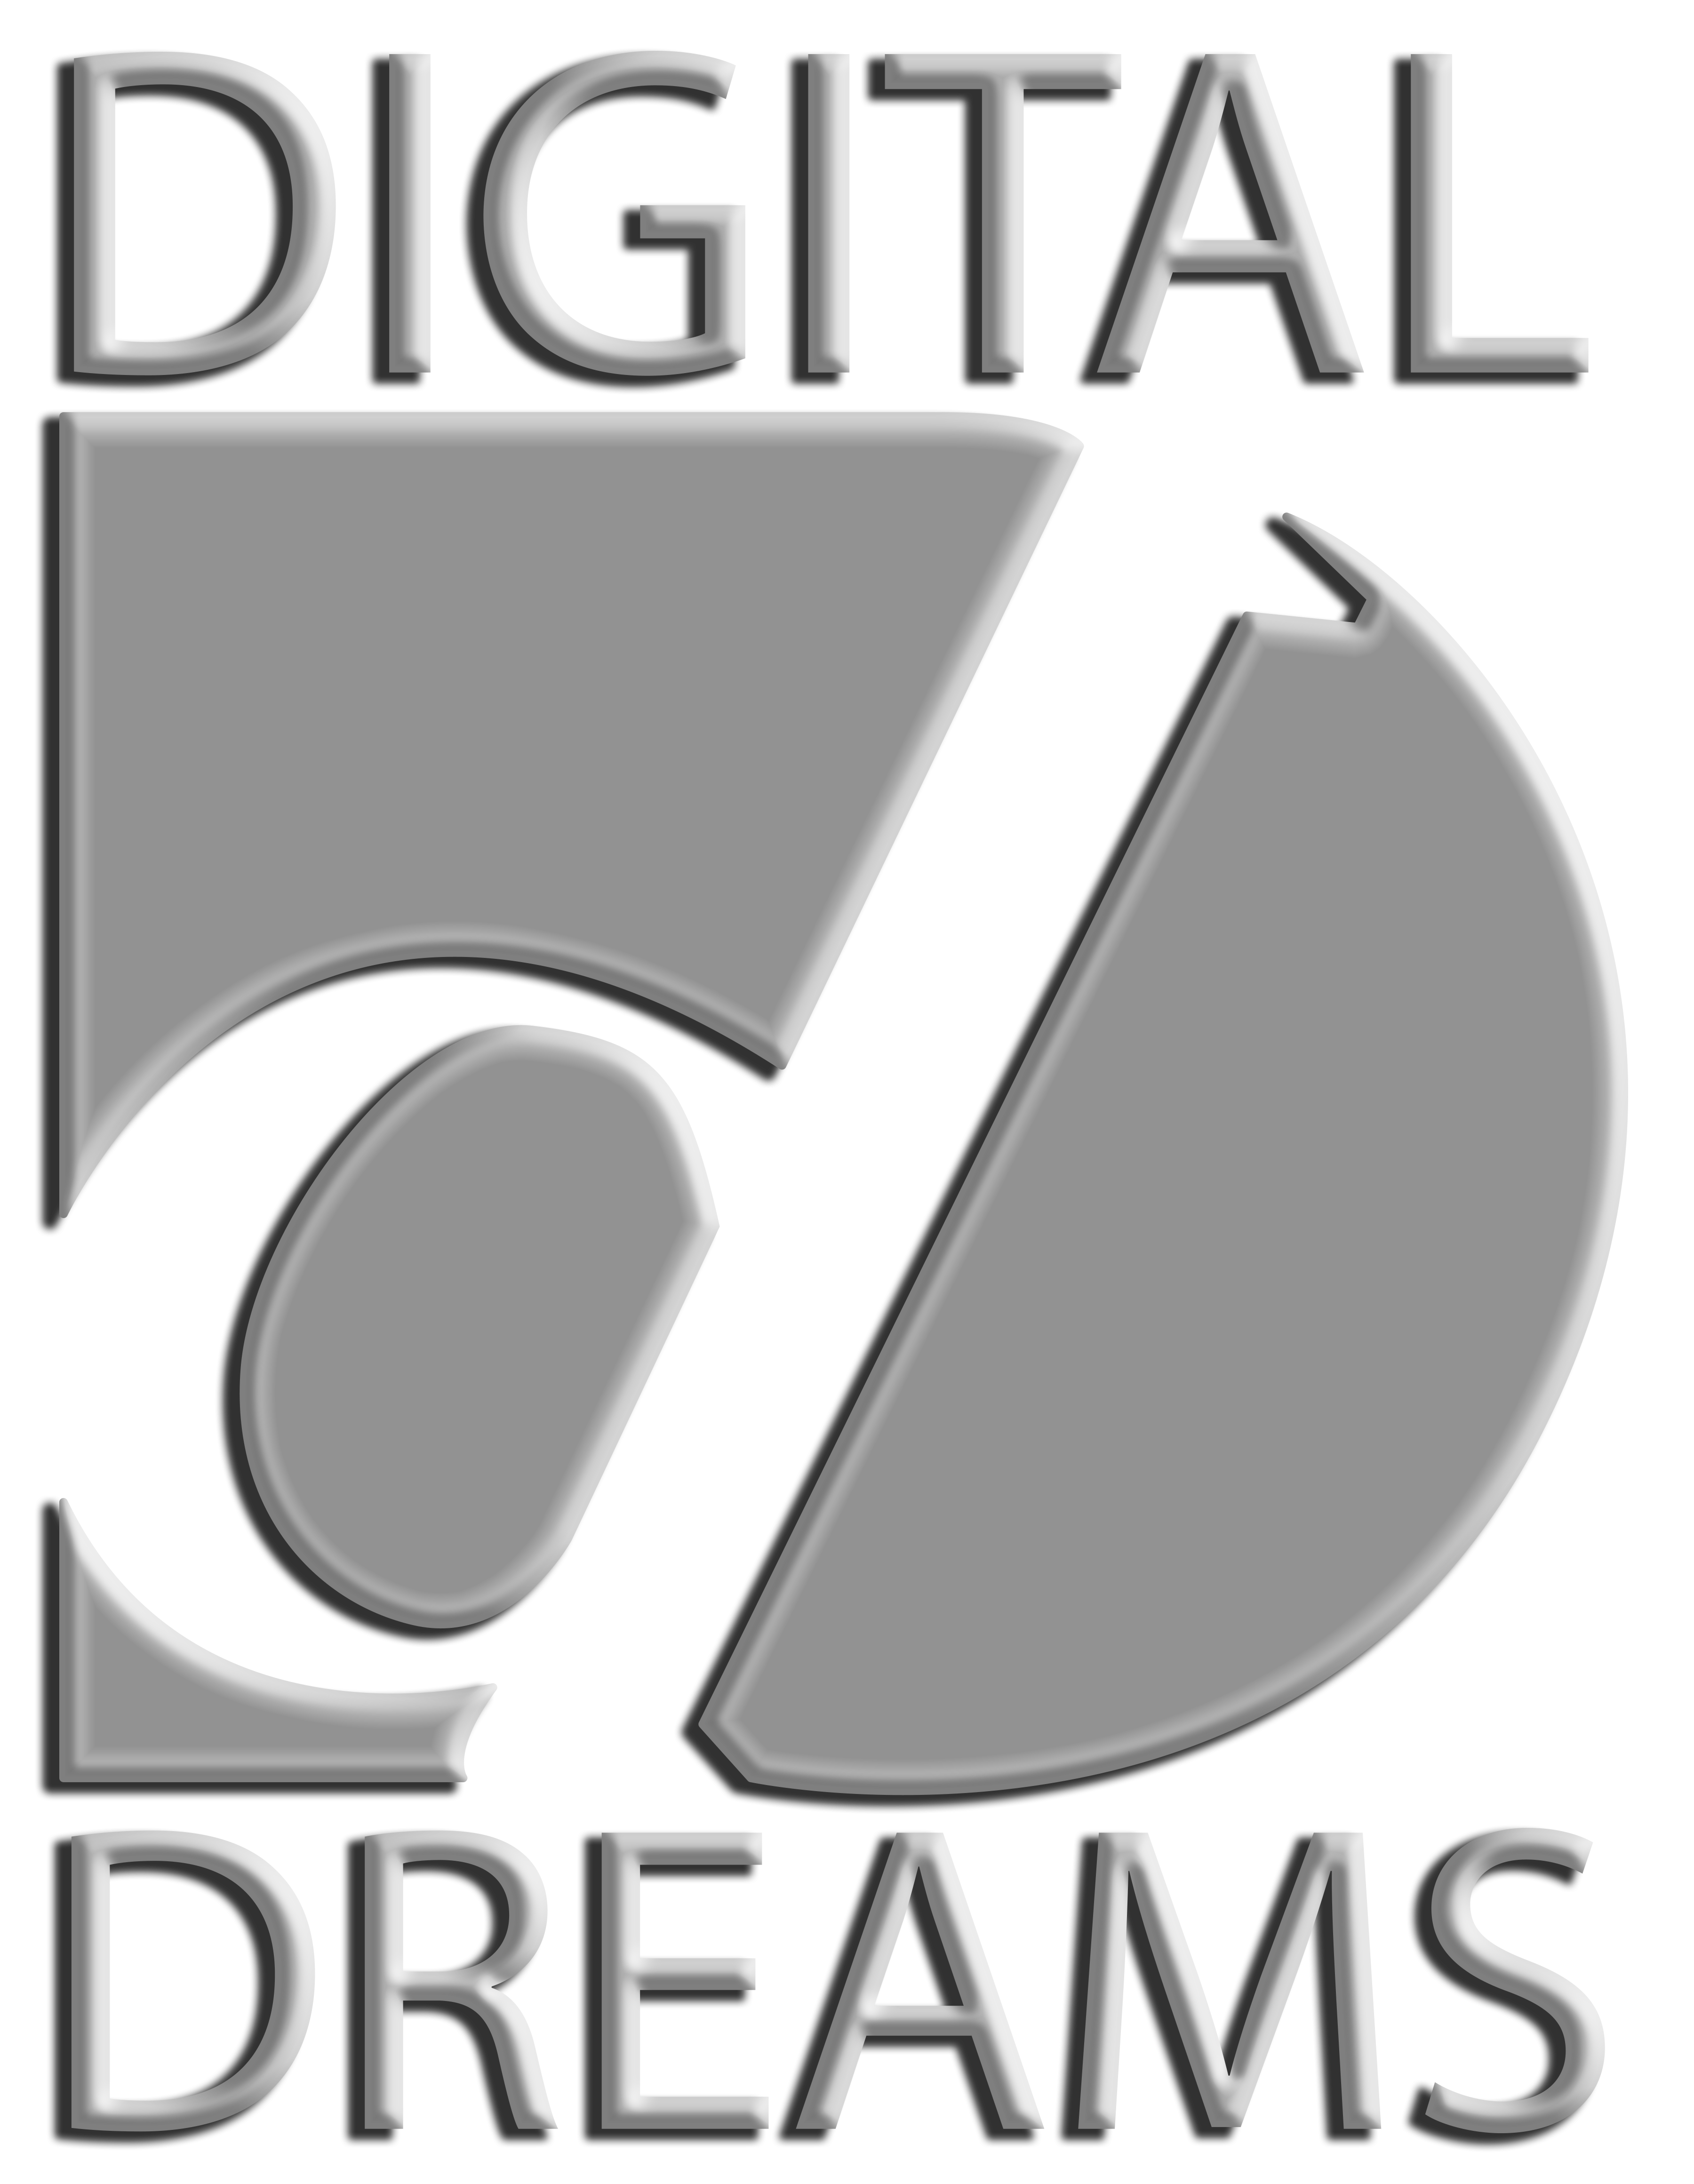 Company Logo For Digital Dreams'